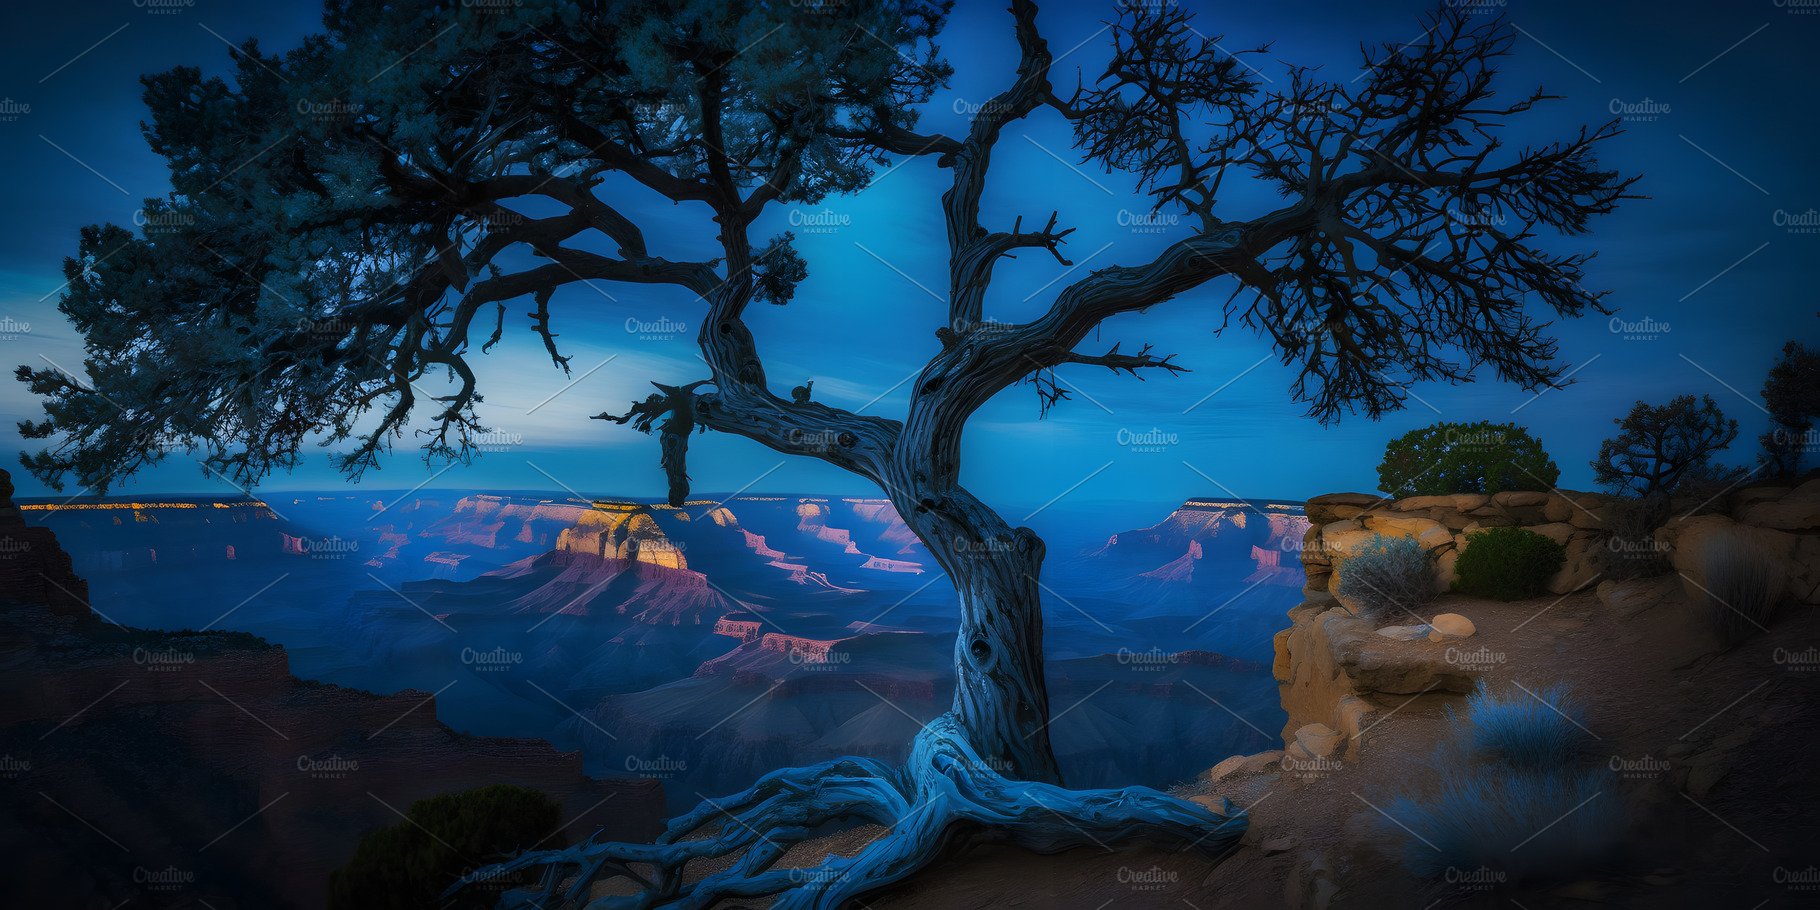 Grand Canyon at night cover image.